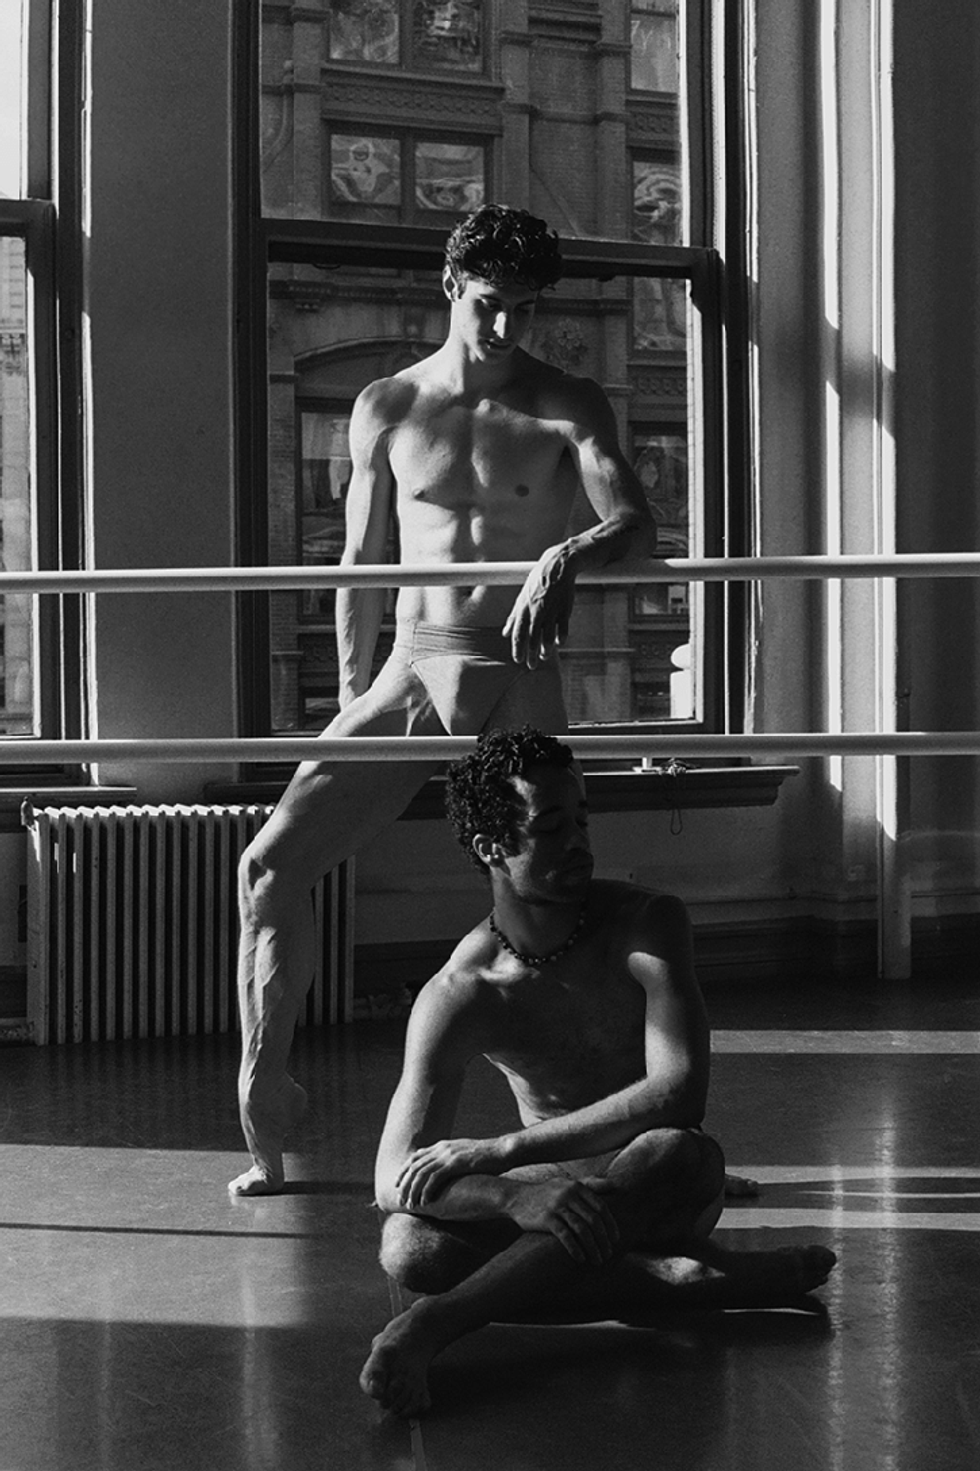 Ballerino (c) David-Simon Dayan